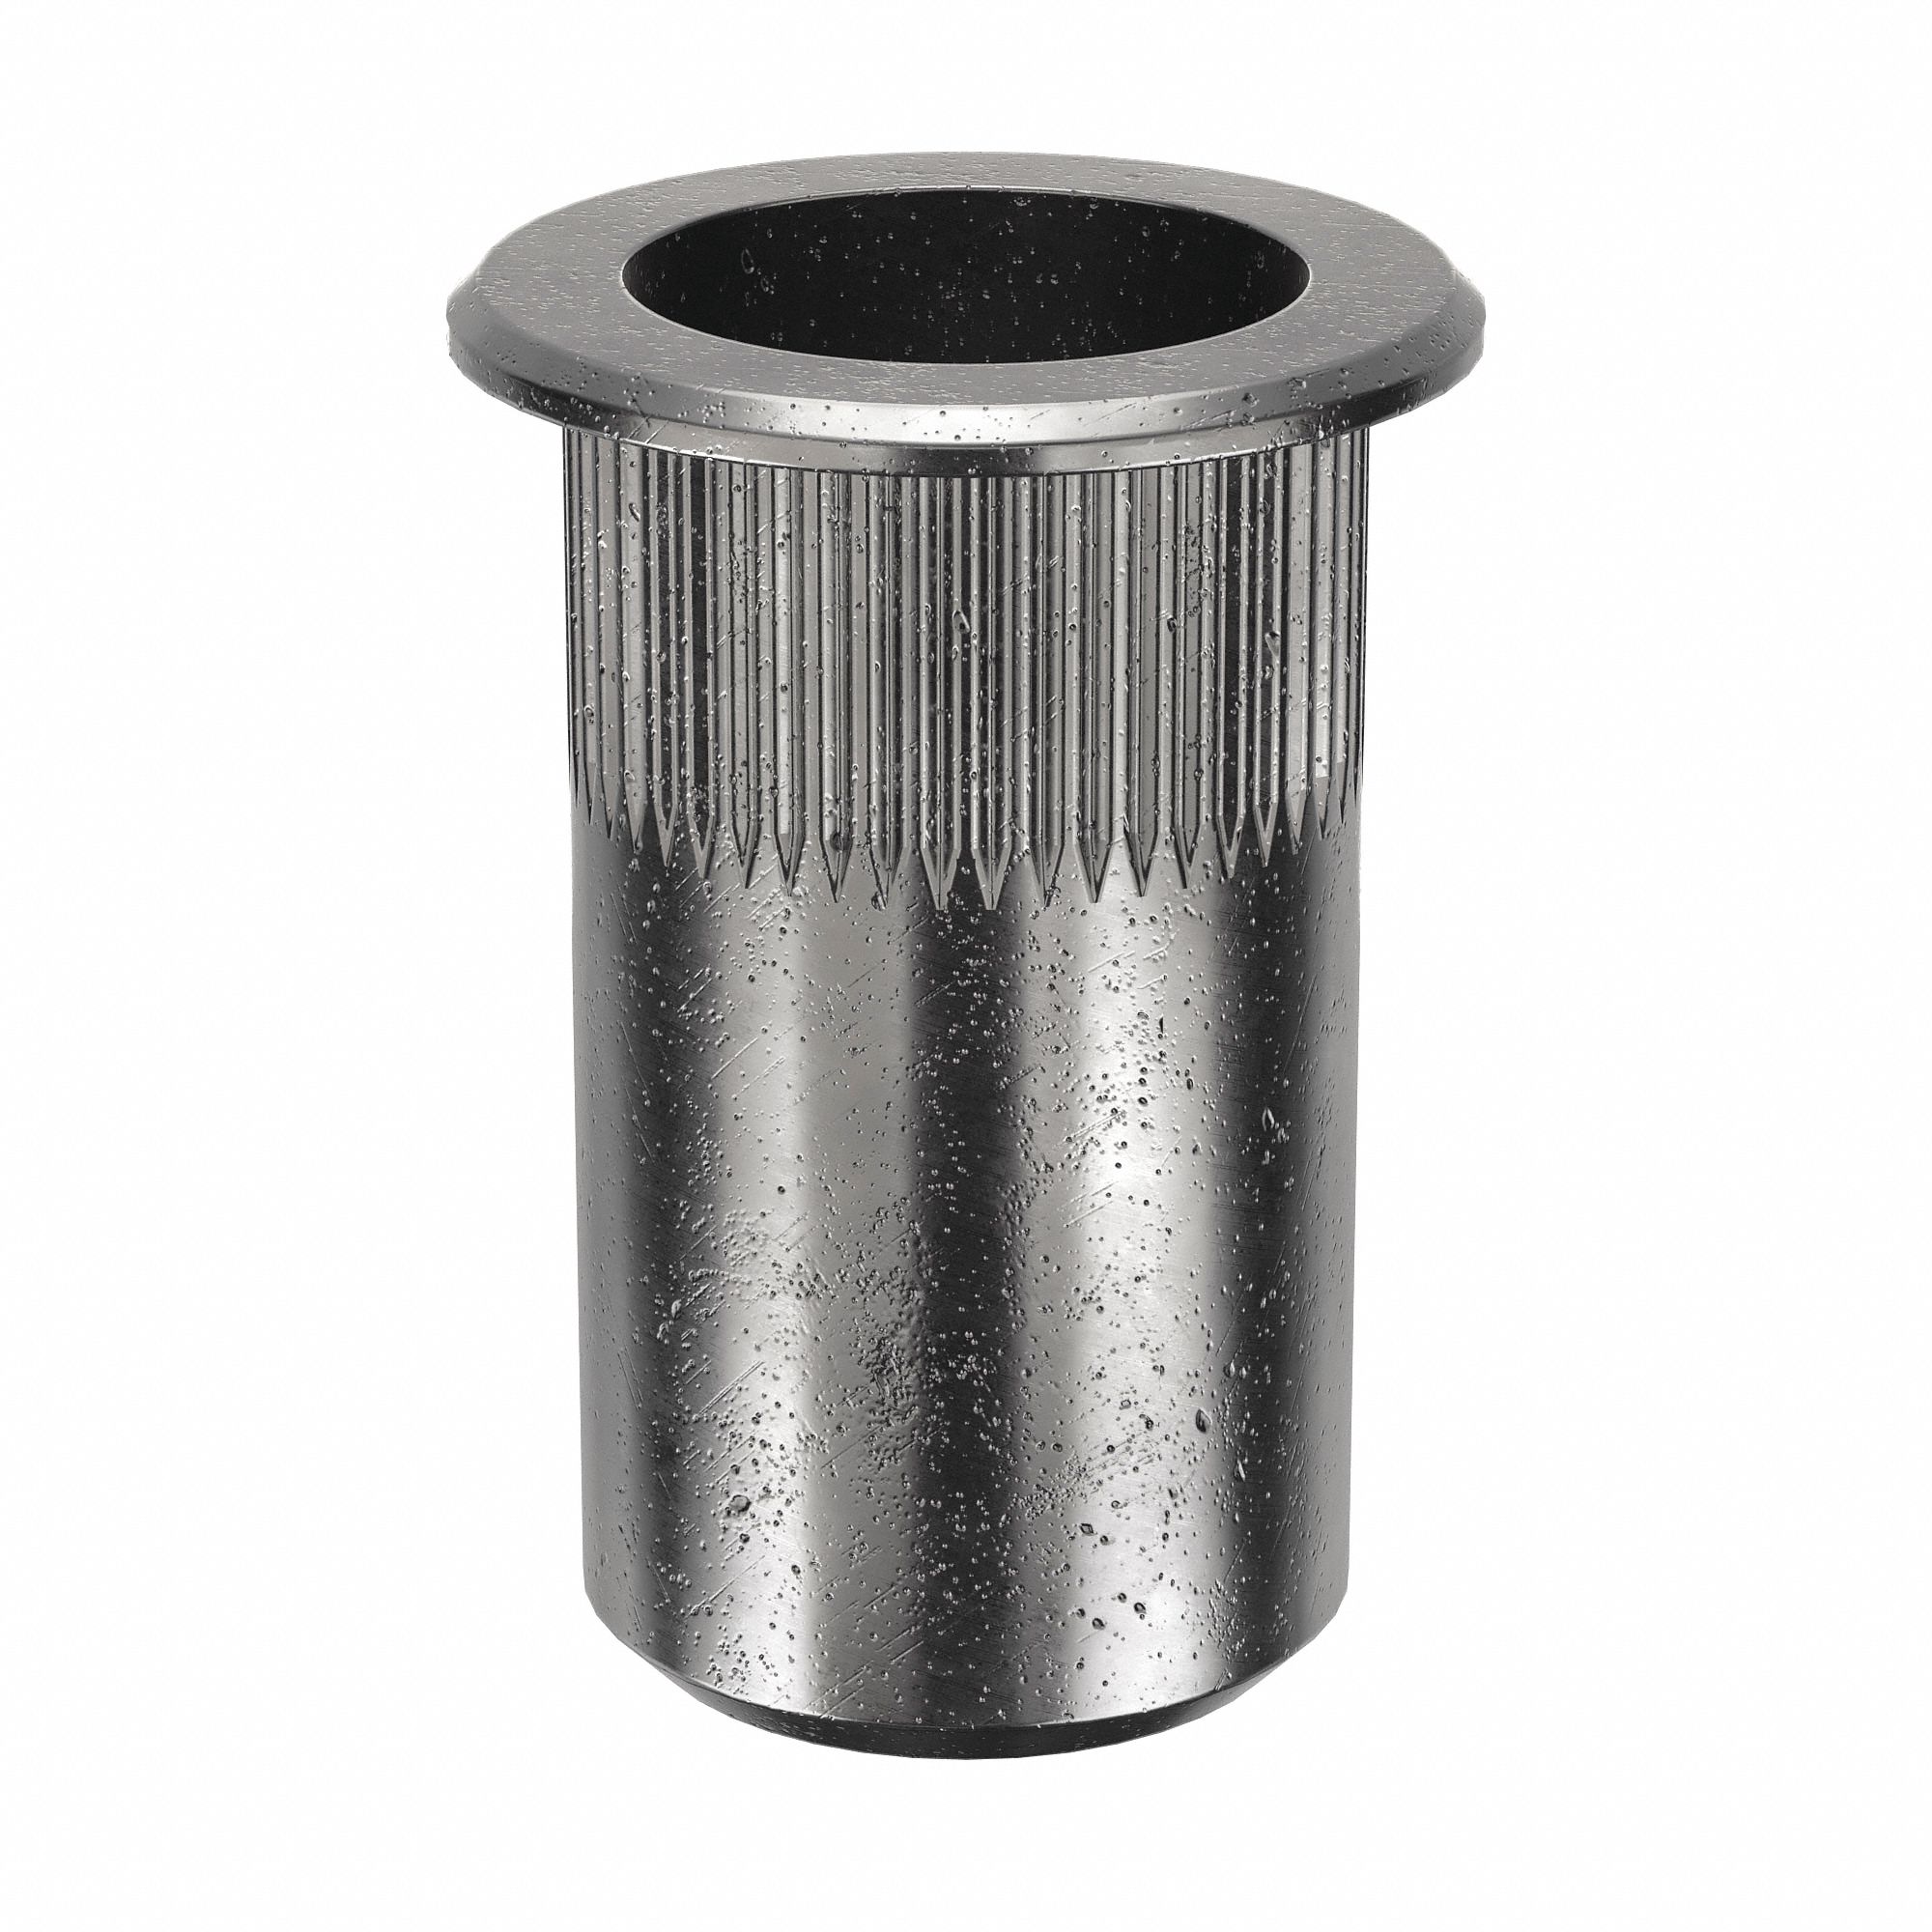  40pcs M6 Rivet Nuts Stainless Steel Threaded Insert Nutsert  Rivnuts M6-1.0 Threads Nuts : Industrial & Scientific